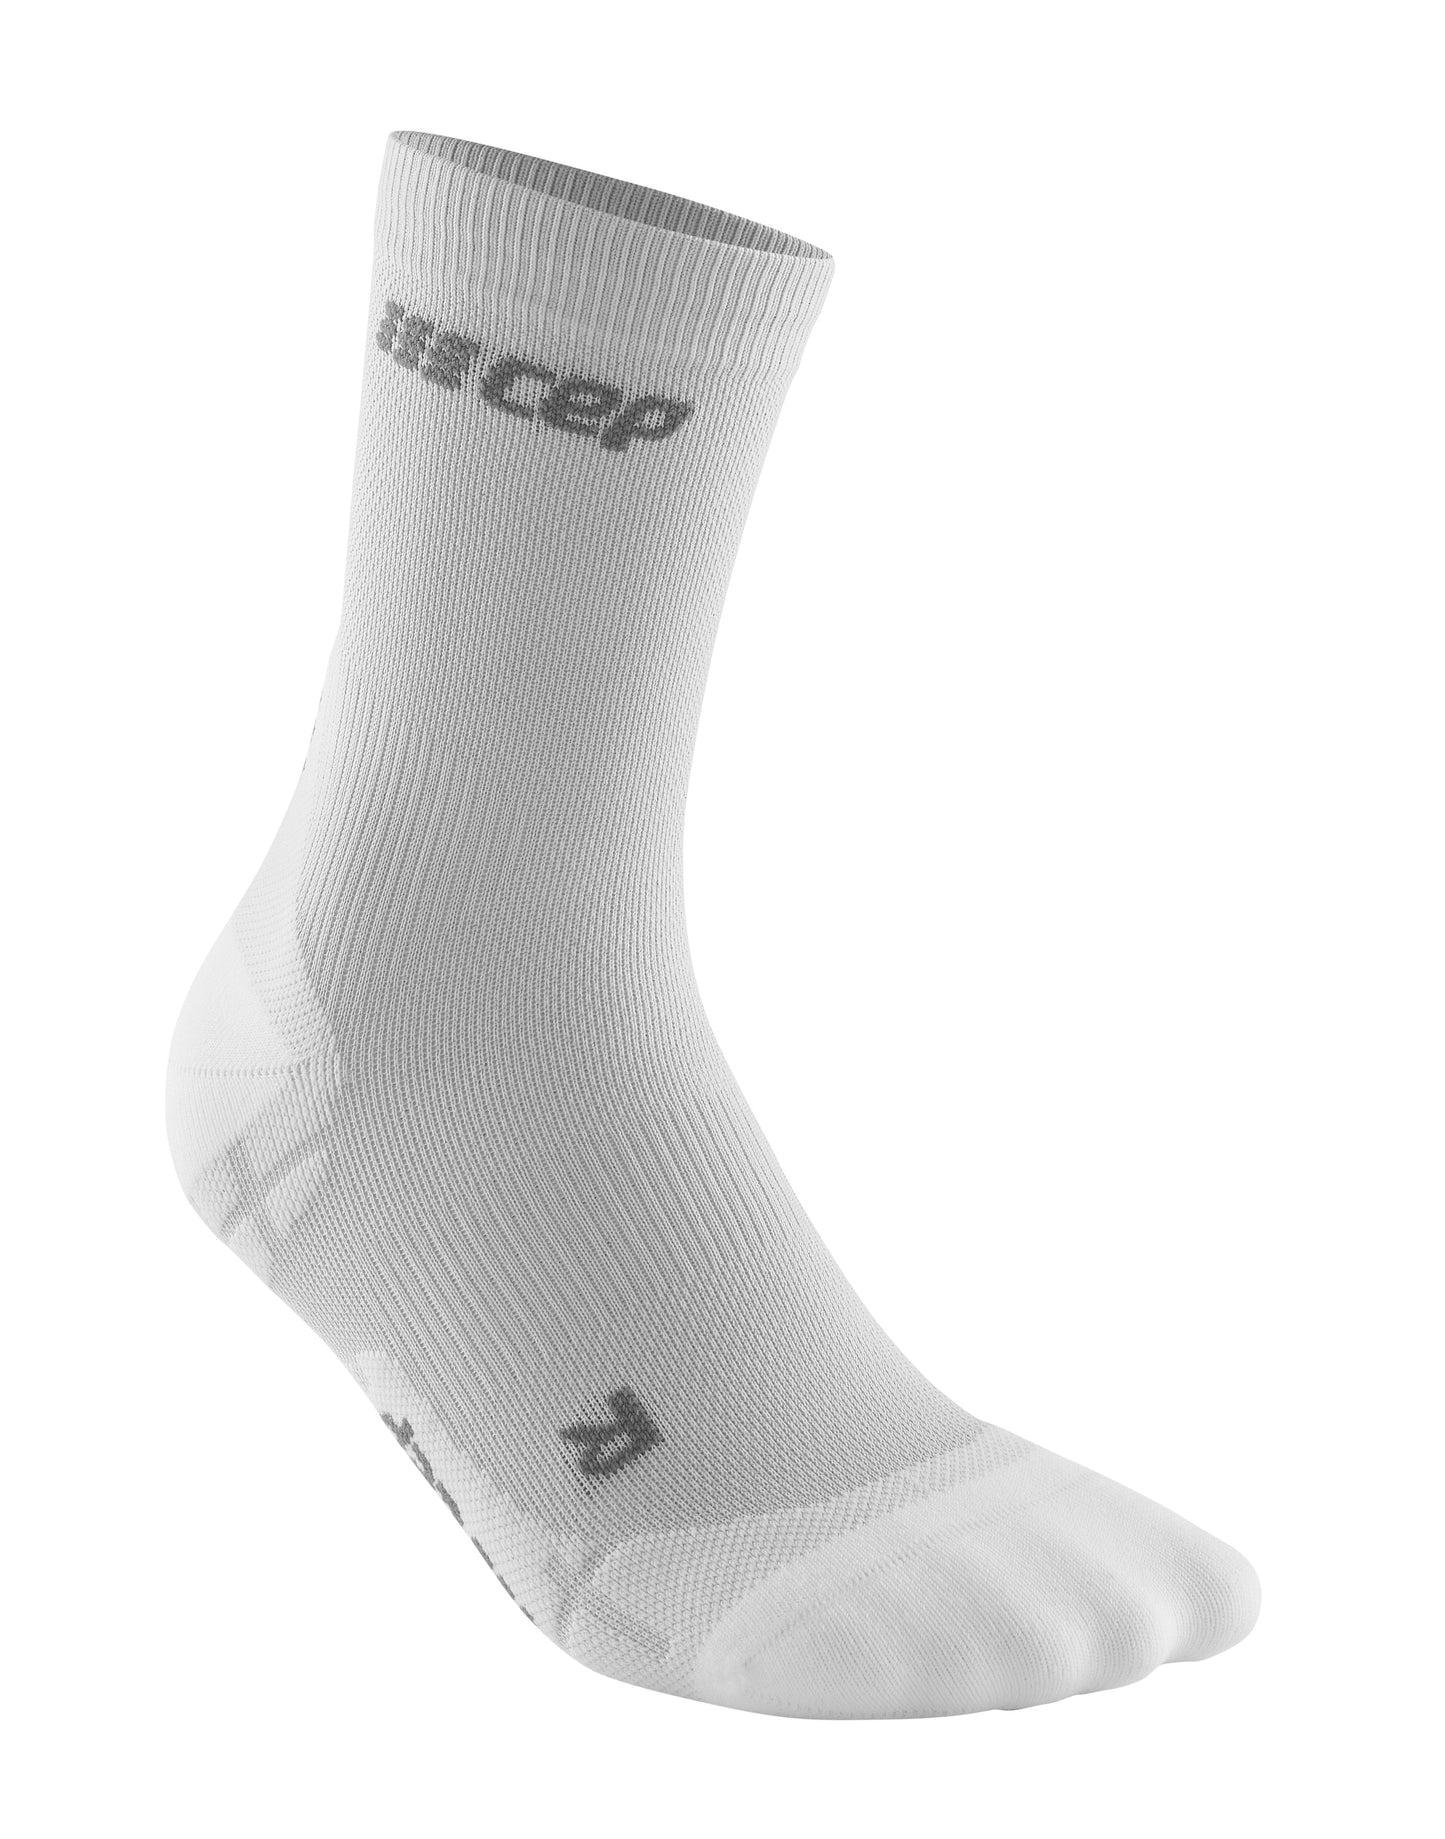 CEP Ultralight  Short Compression Sock Women's - Carbon White